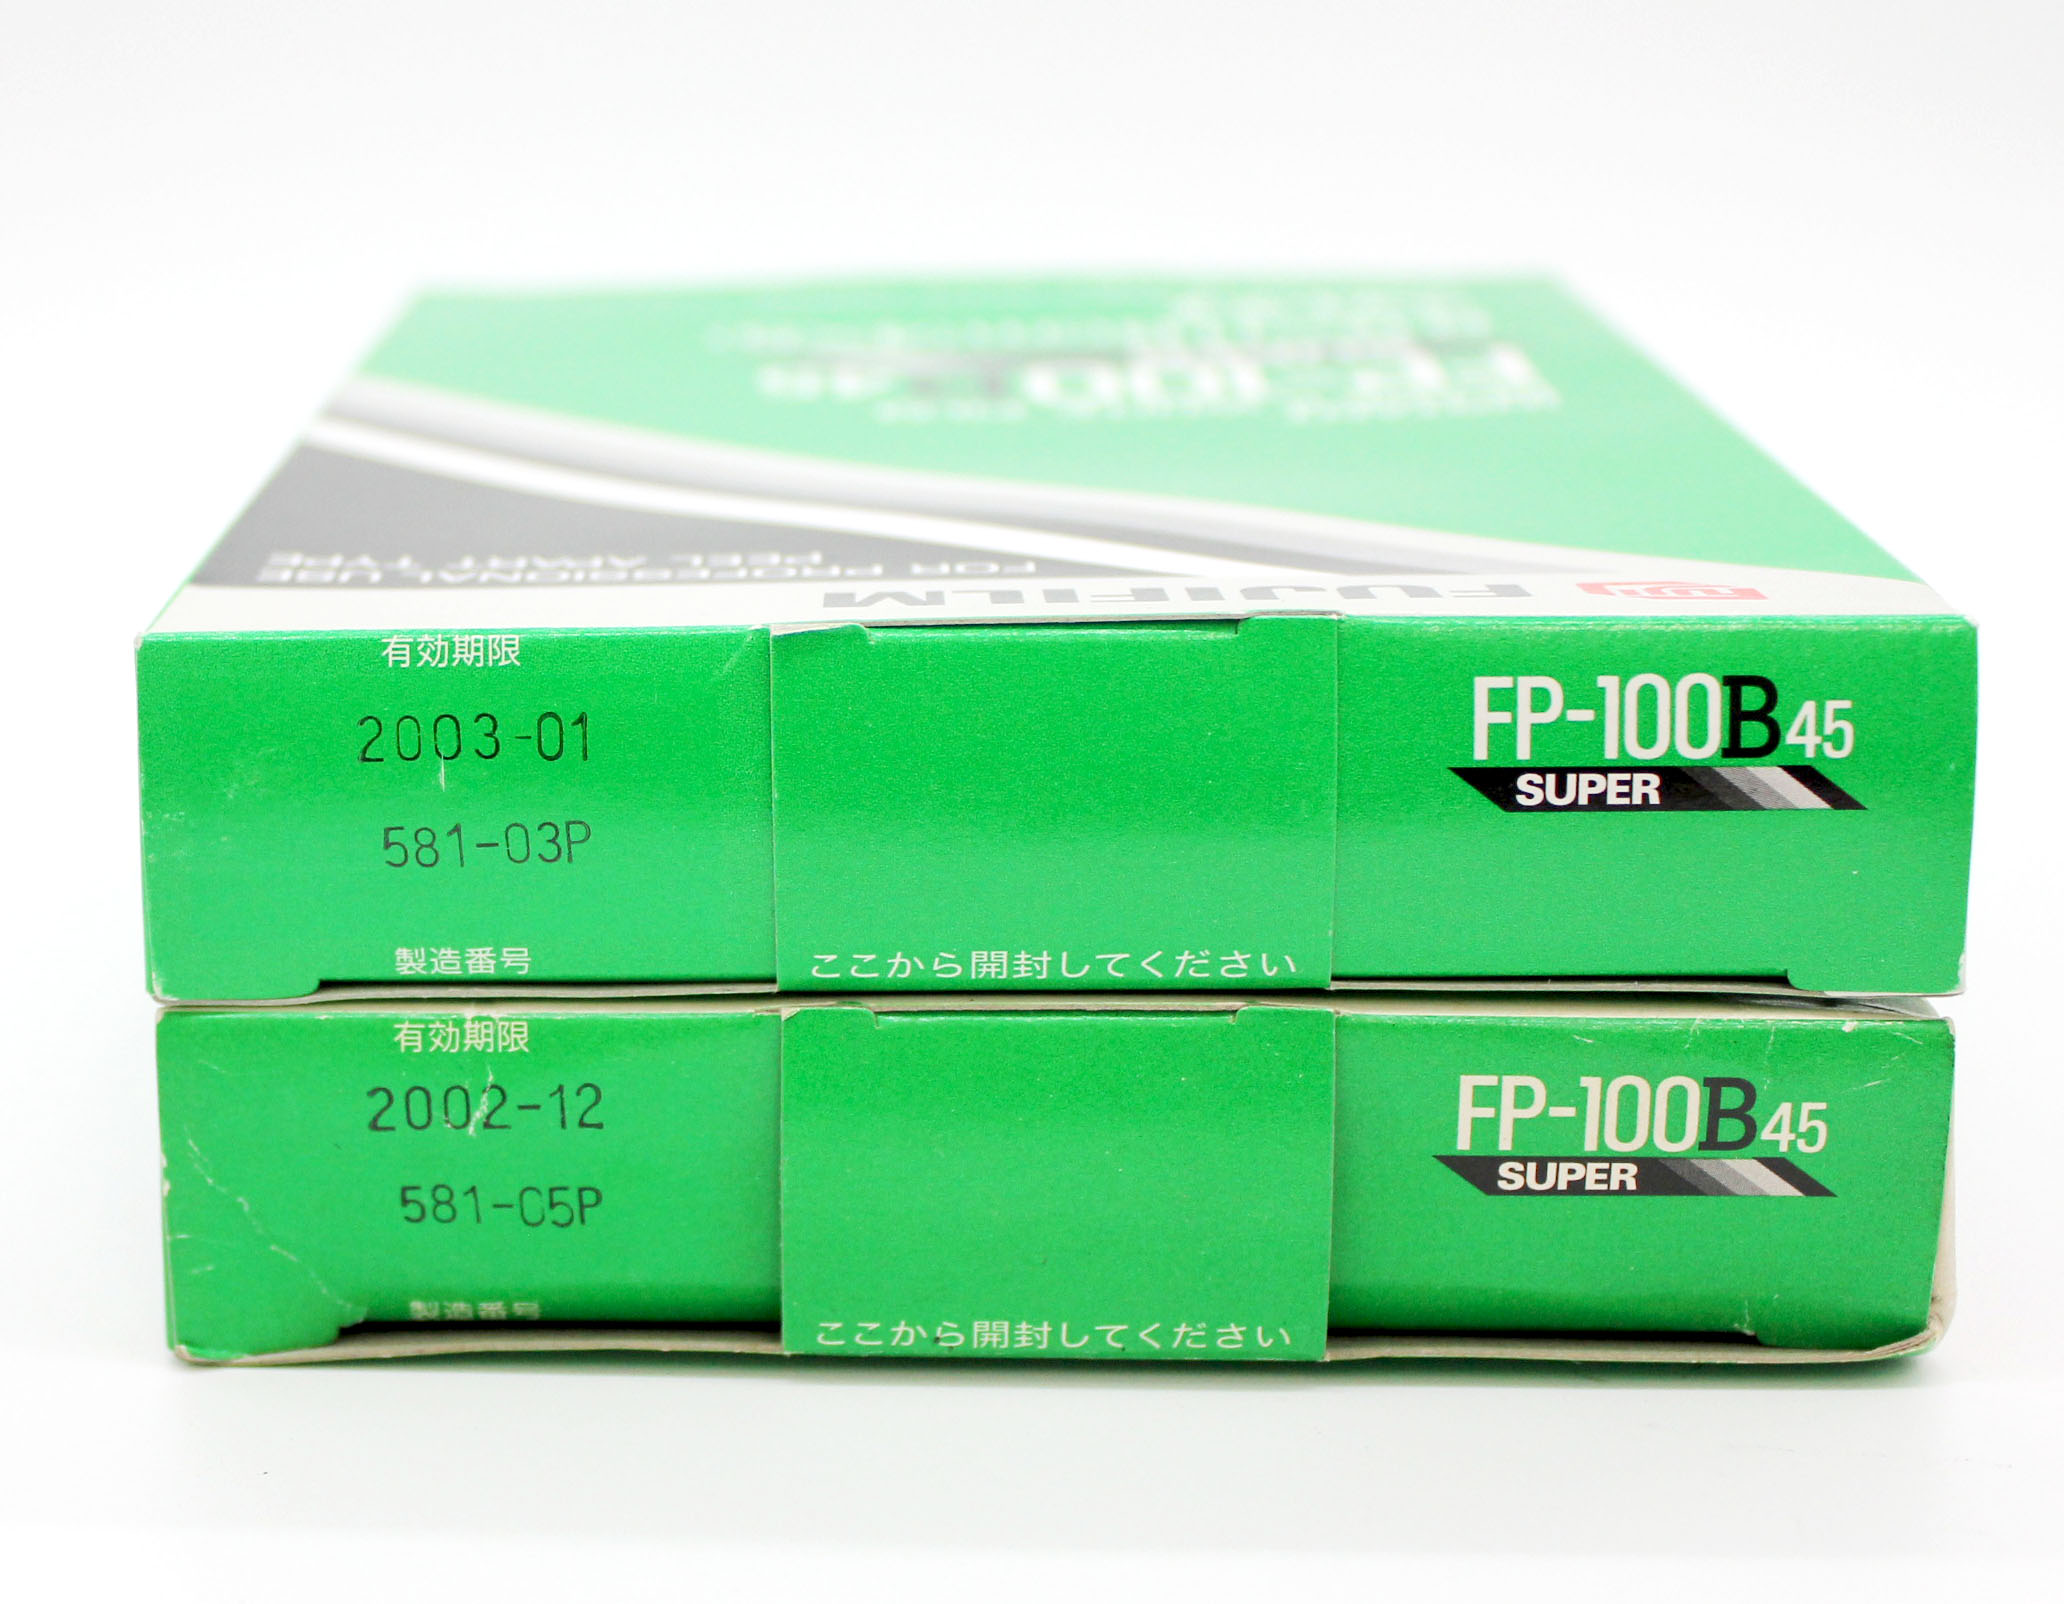  Fuji Fujifilm FP-100B45 4x5 8.9x11.8cm Instant Black & White Film Set of 2 (Expired) Photo 2